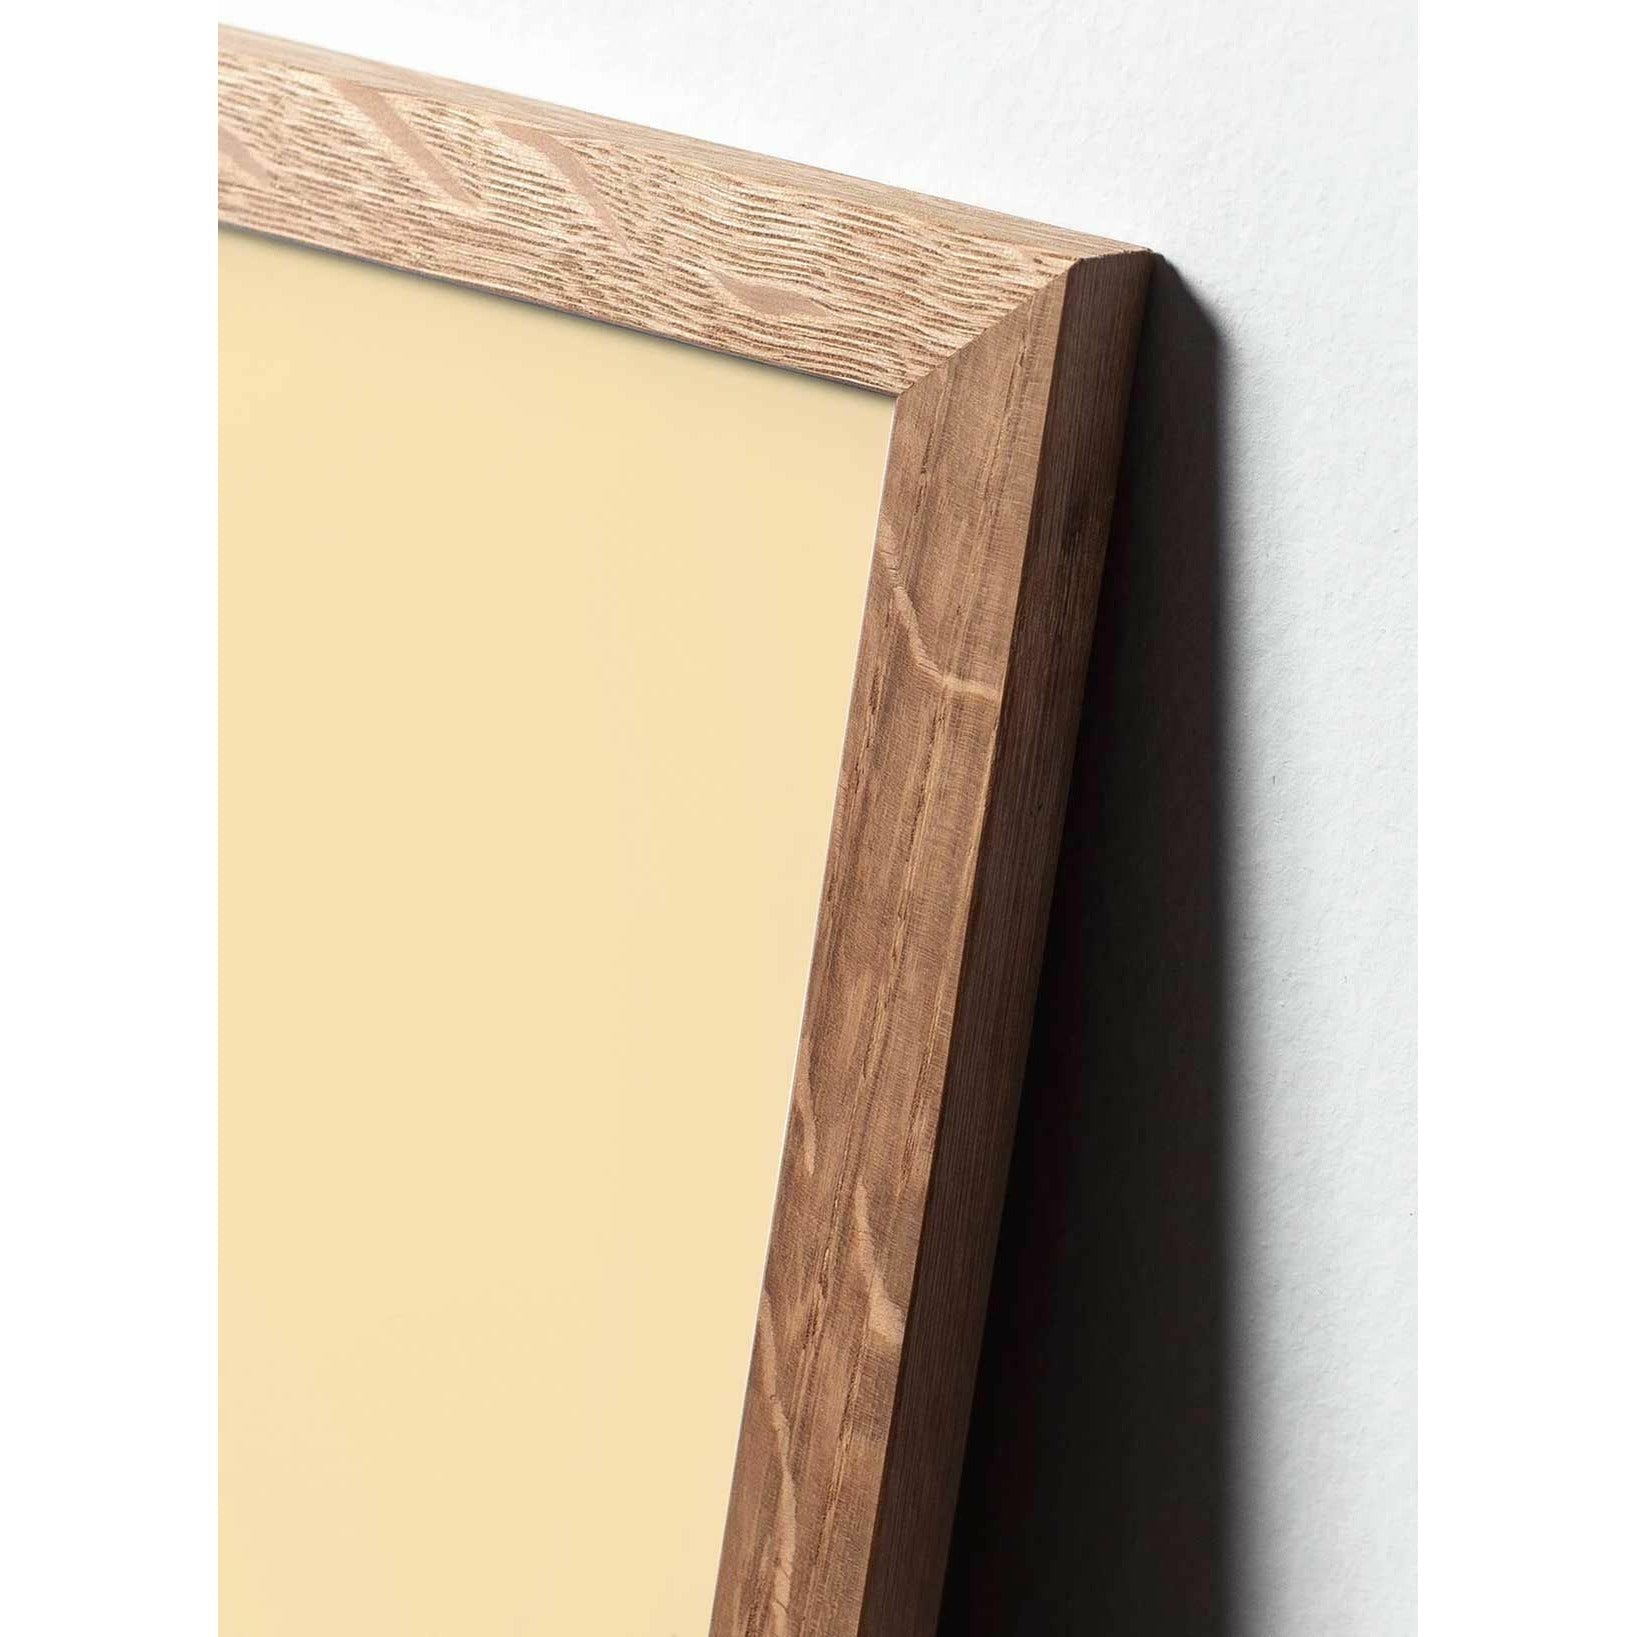 Póster de línea de caída de creación, marco hecho de madera clara de 30x40 cm, fondo blanco